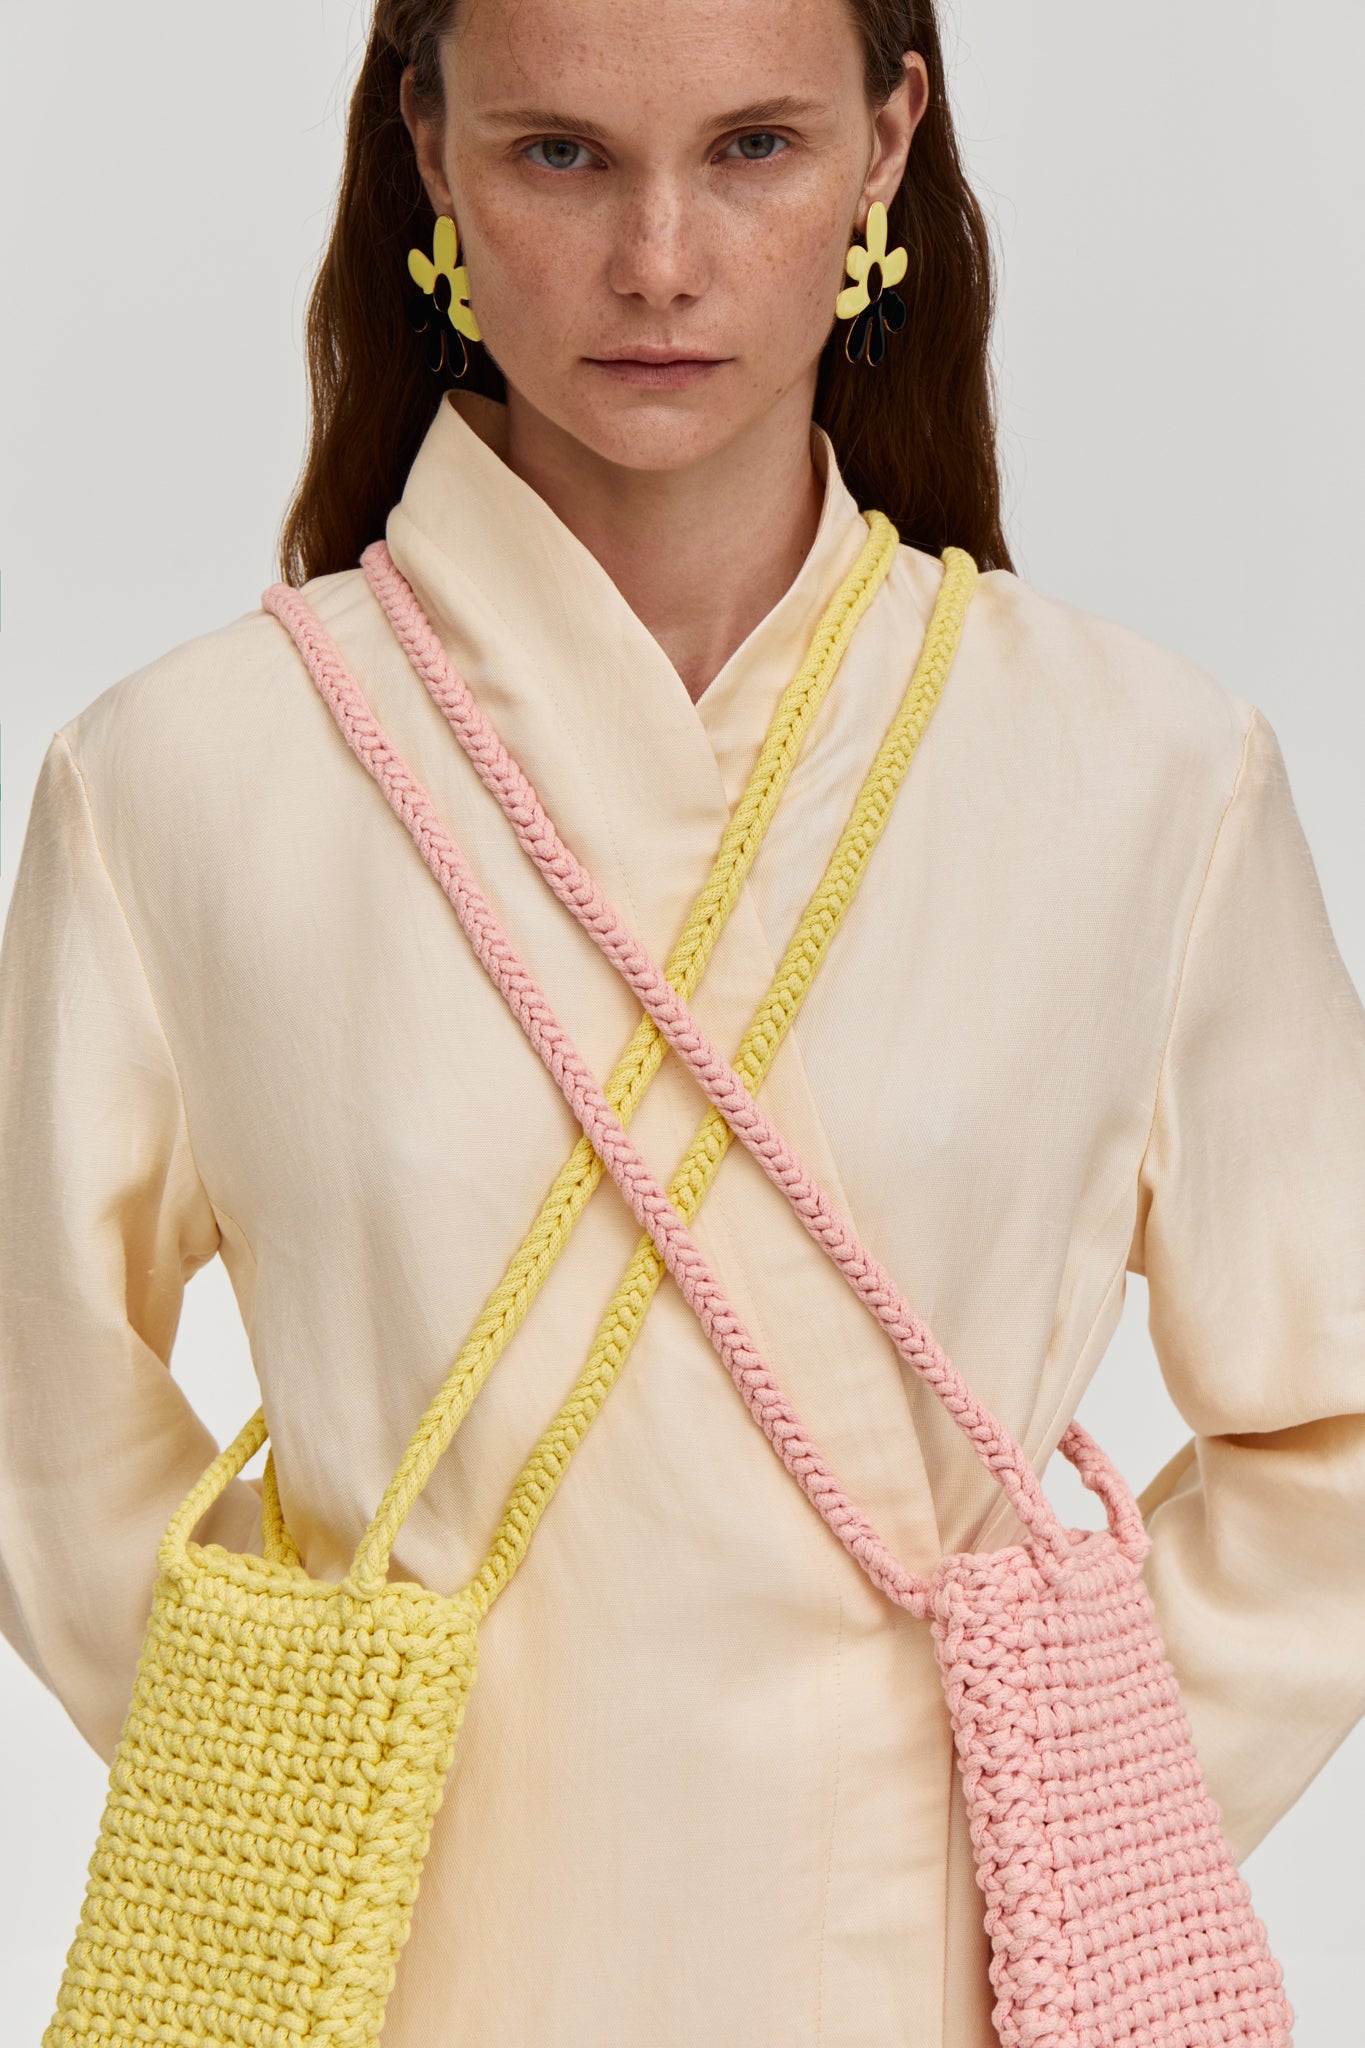 Crochet shoulders bag in Yellow color from Ukrainian brand FORMA